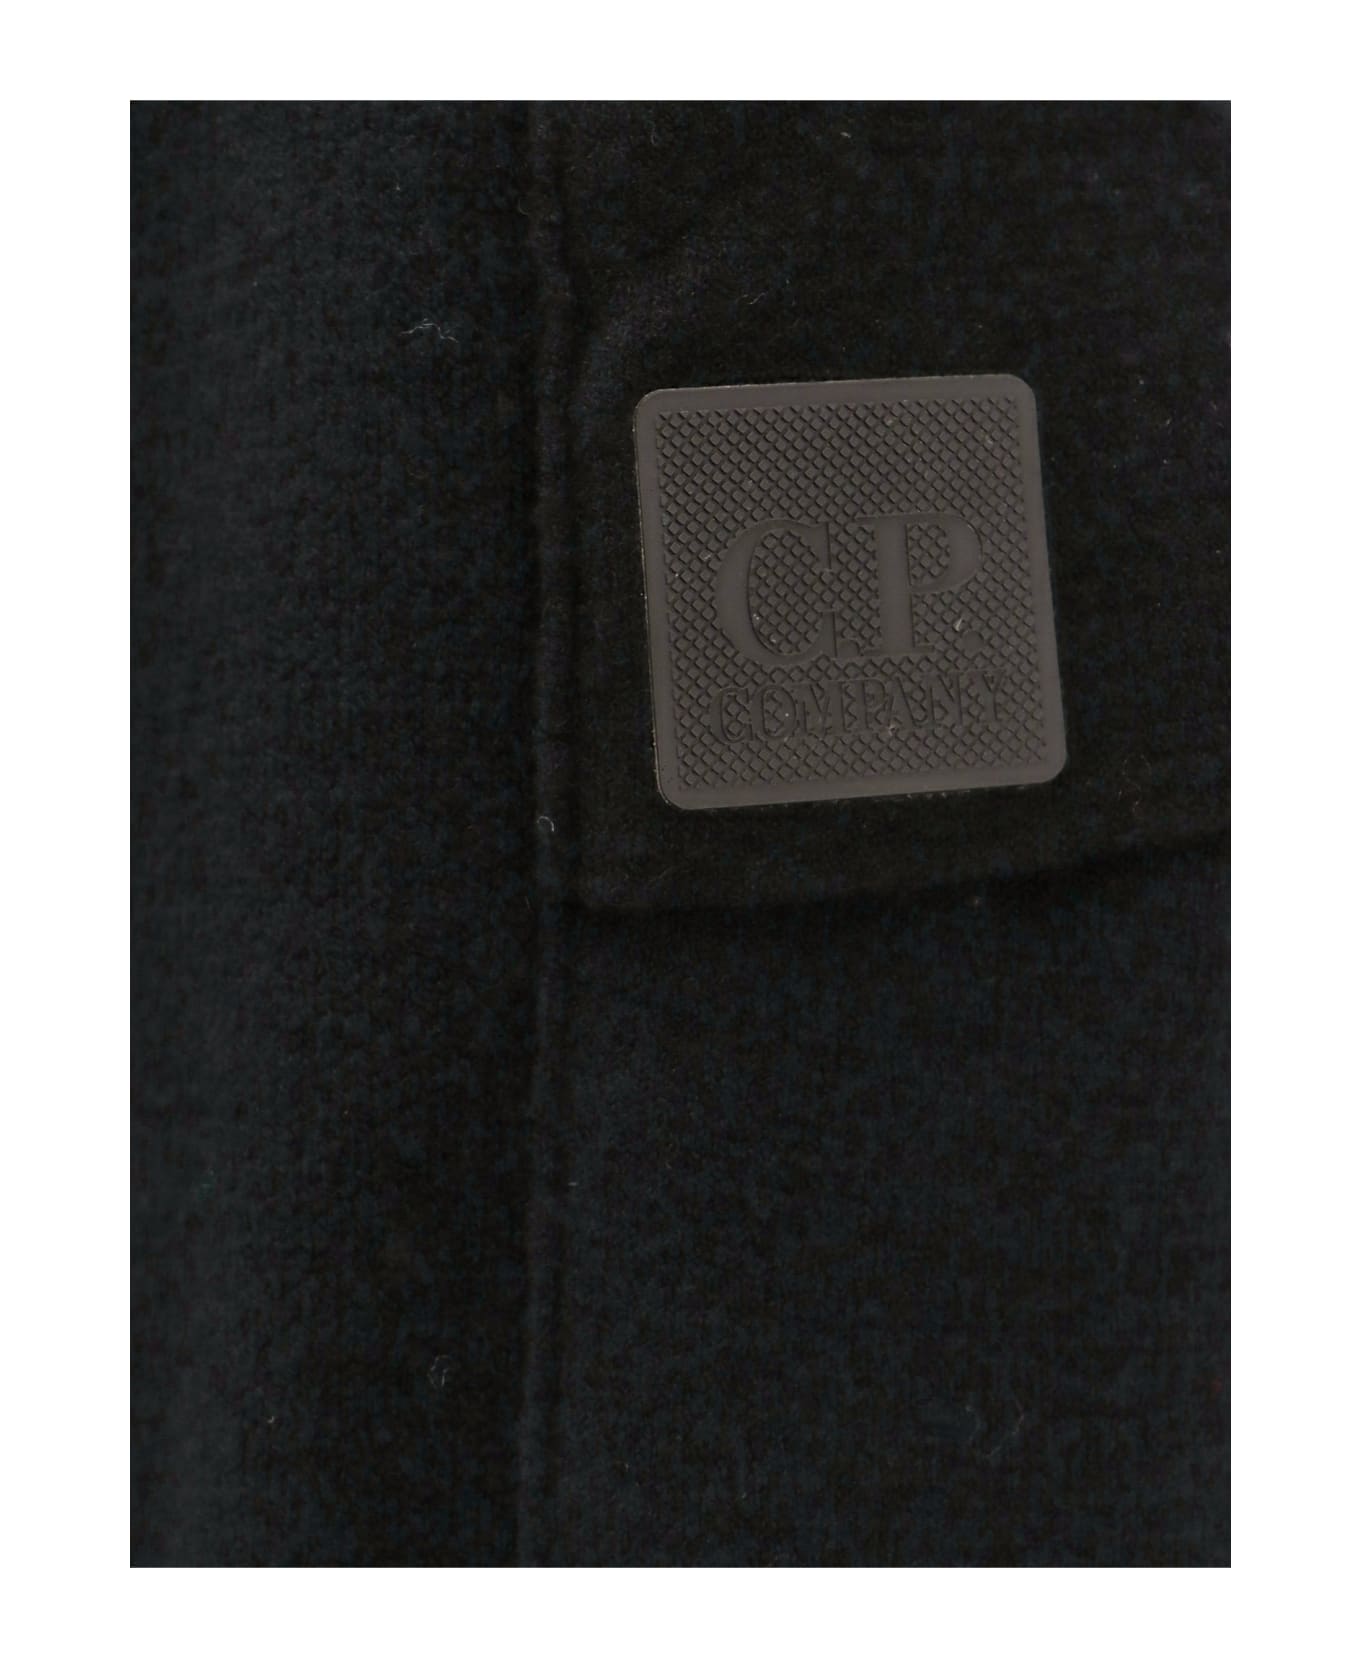 C.P. Company Sweater - Black